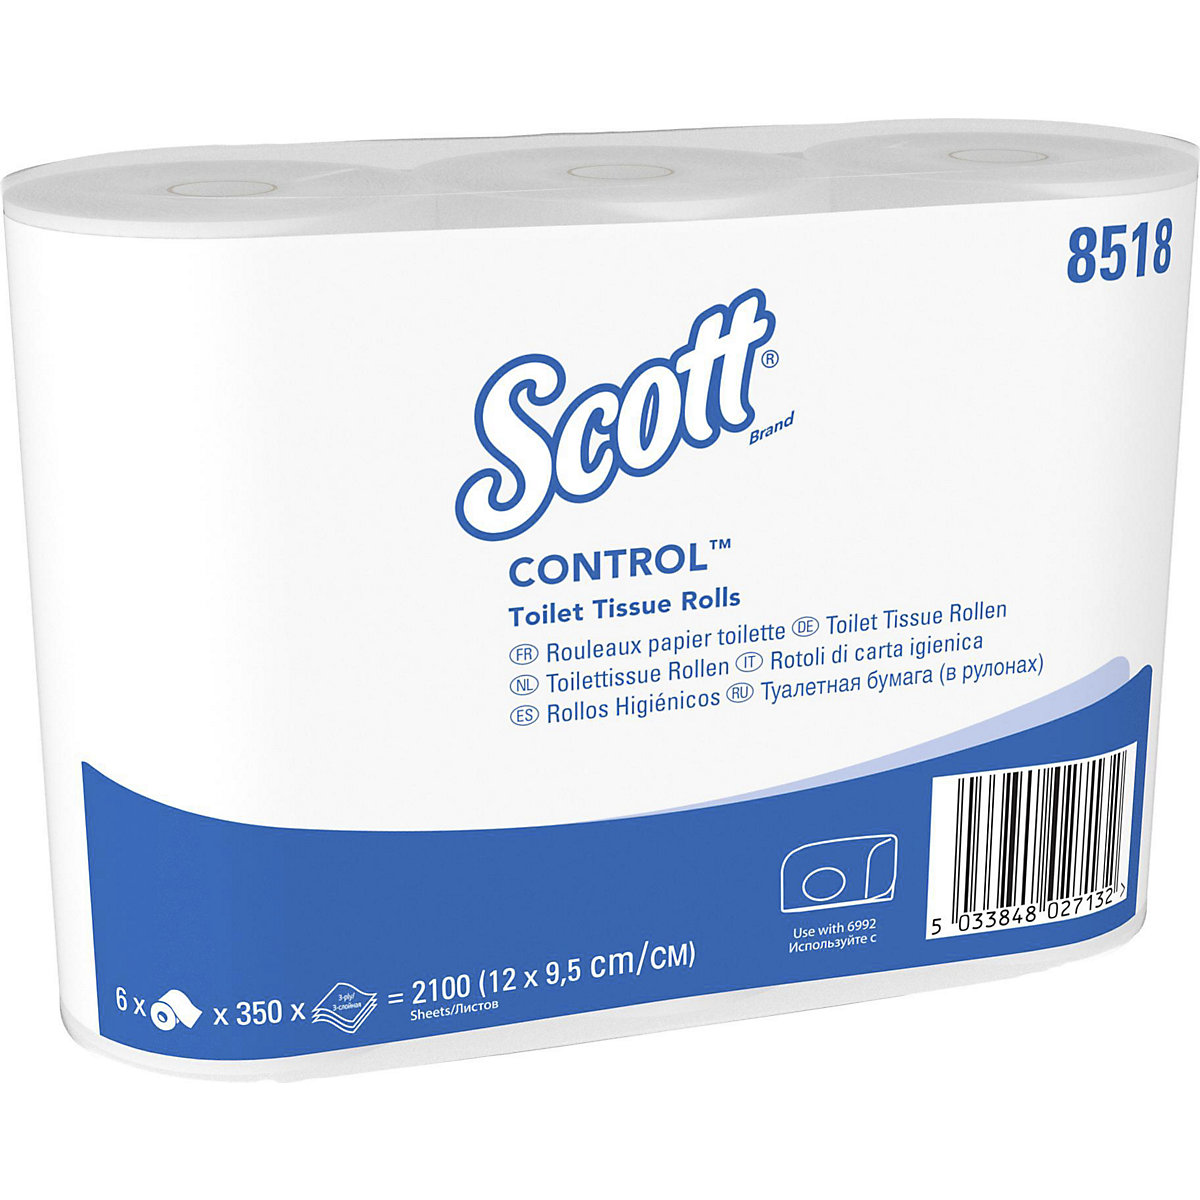 Papel higiénico Scott® CONTROL™ padrão – Kimberly-Clark